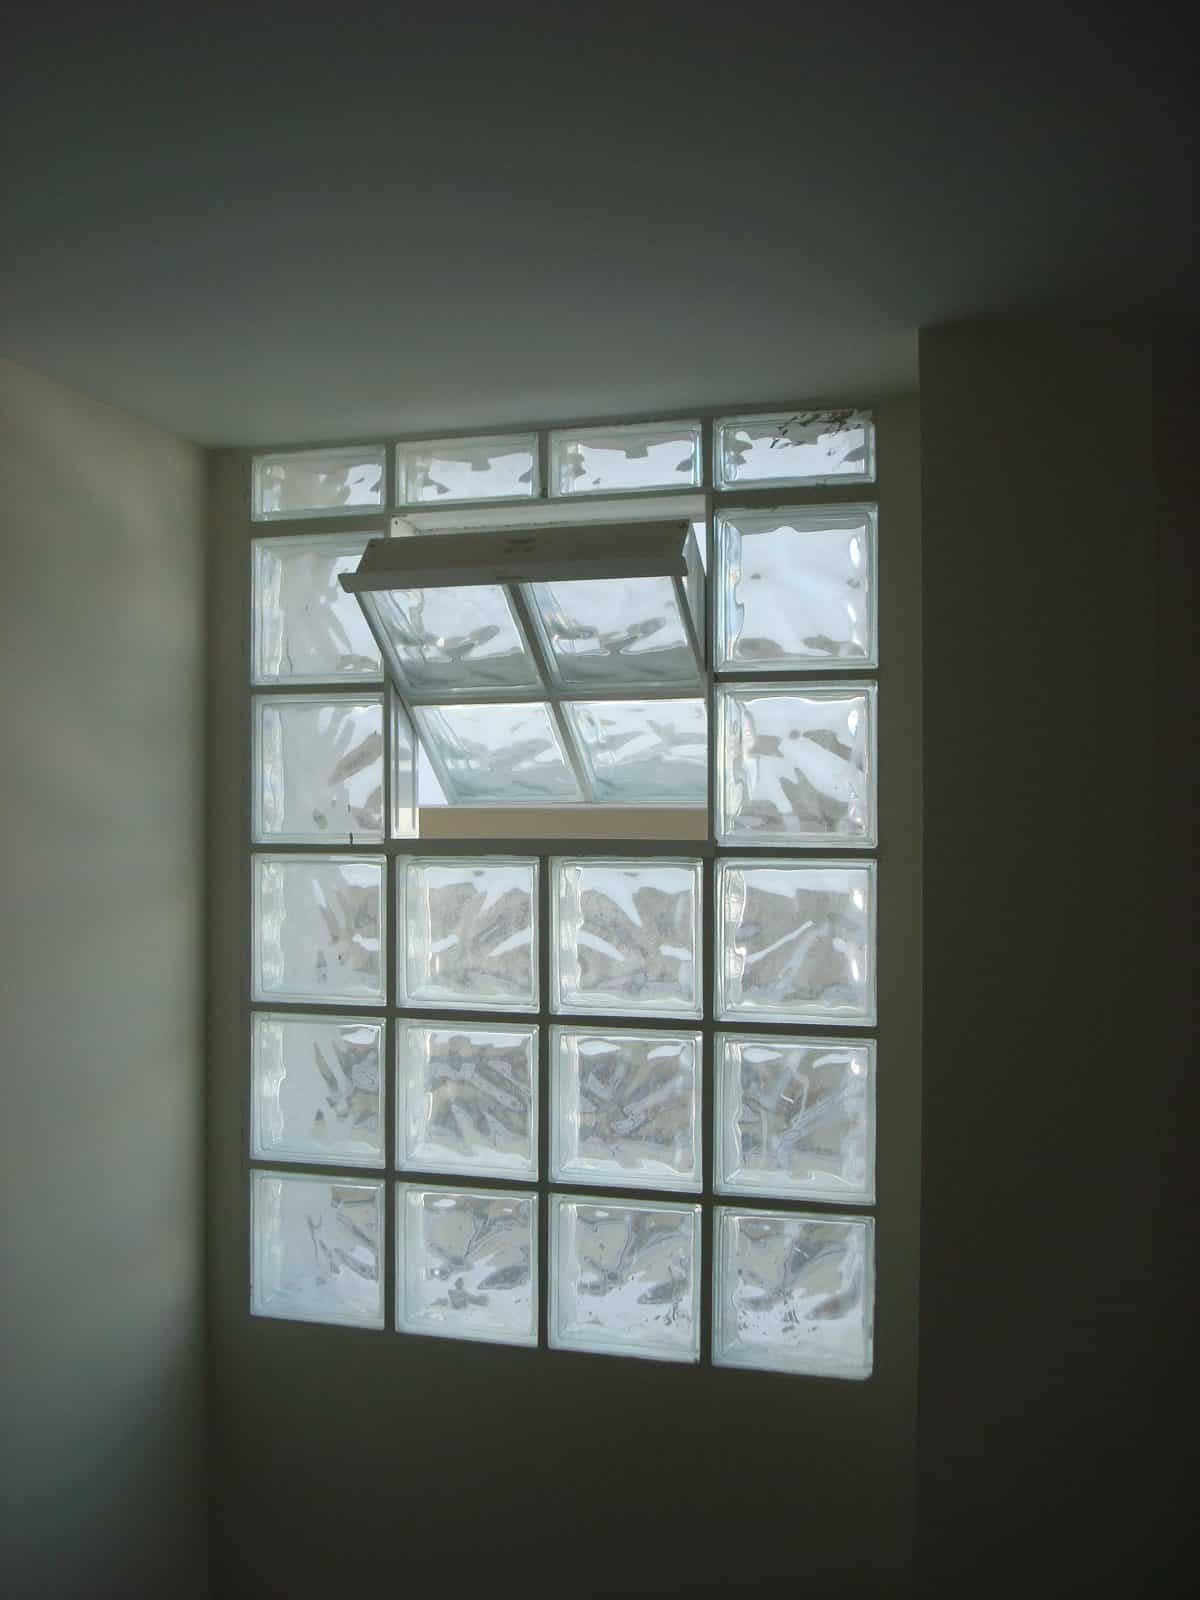 METAL FRAME WINDOW FOR 2 GLASS BLOCKS 19X19 BY DECOMAT (EXTERNAL DIMENSION 21,7×43,5cm)